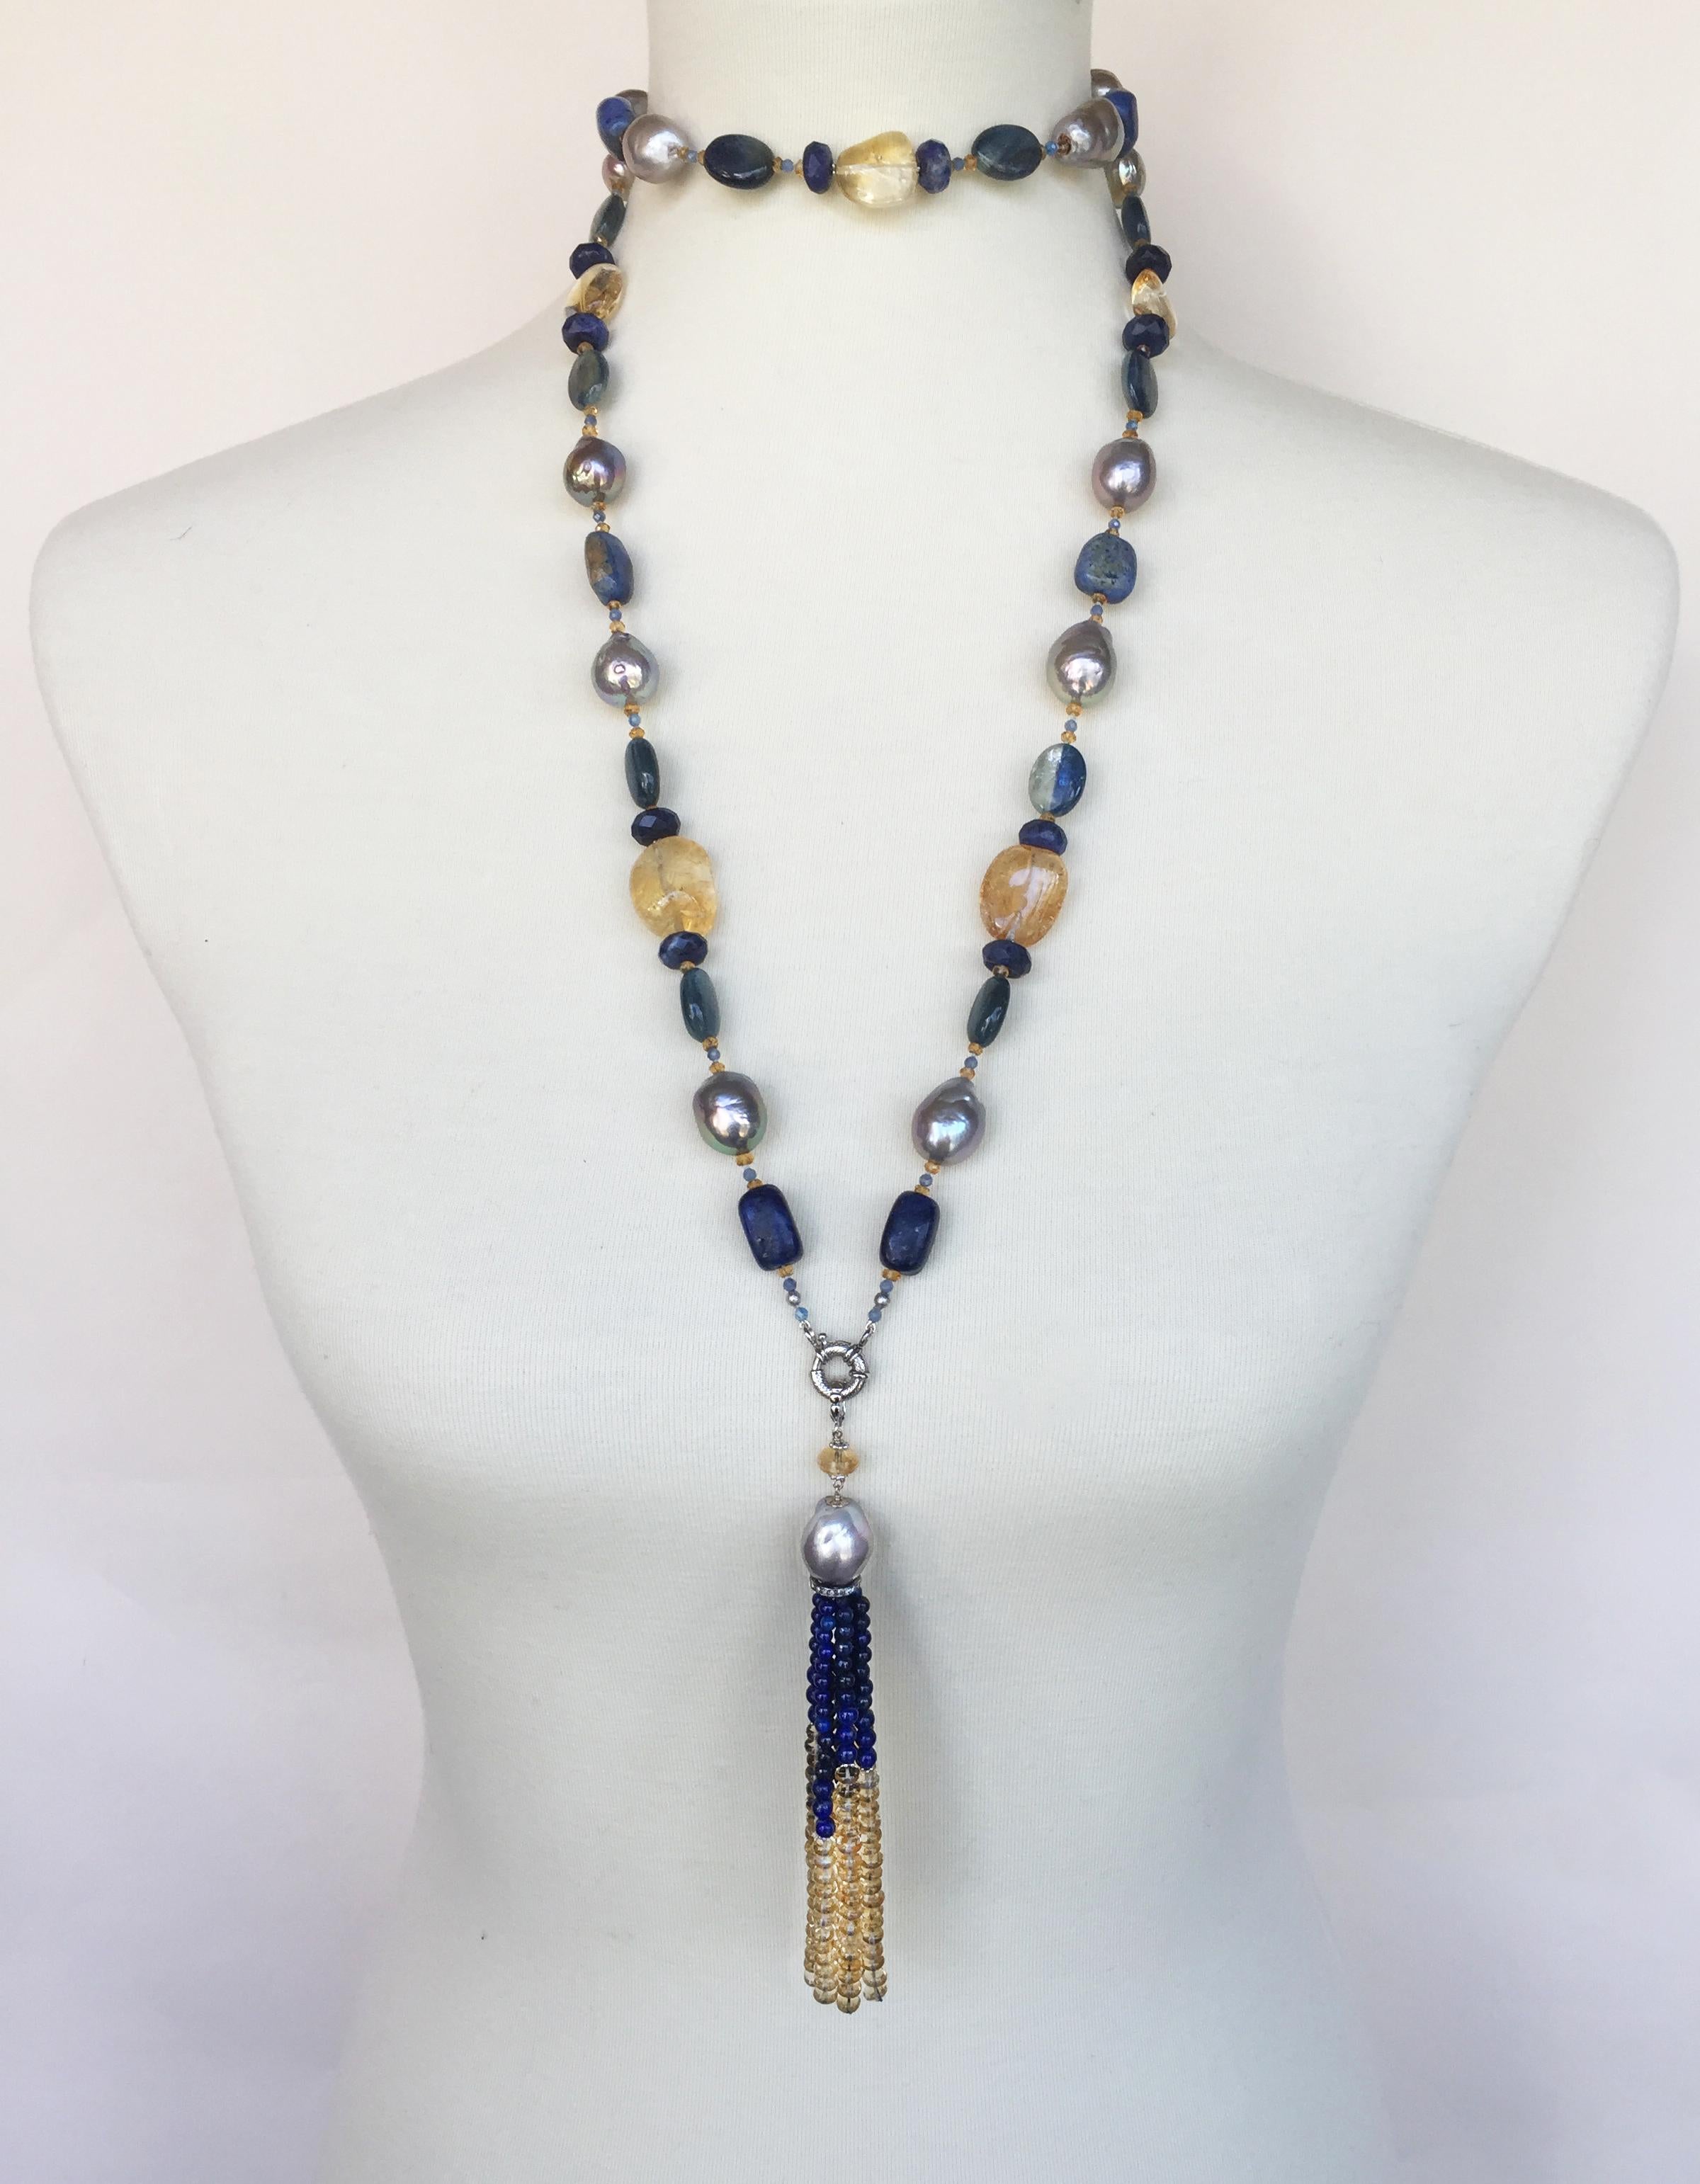 Bead Marina J. Grey Pearl and Semiprecious Stones Sautoir Necklace with 14 Karat Gold